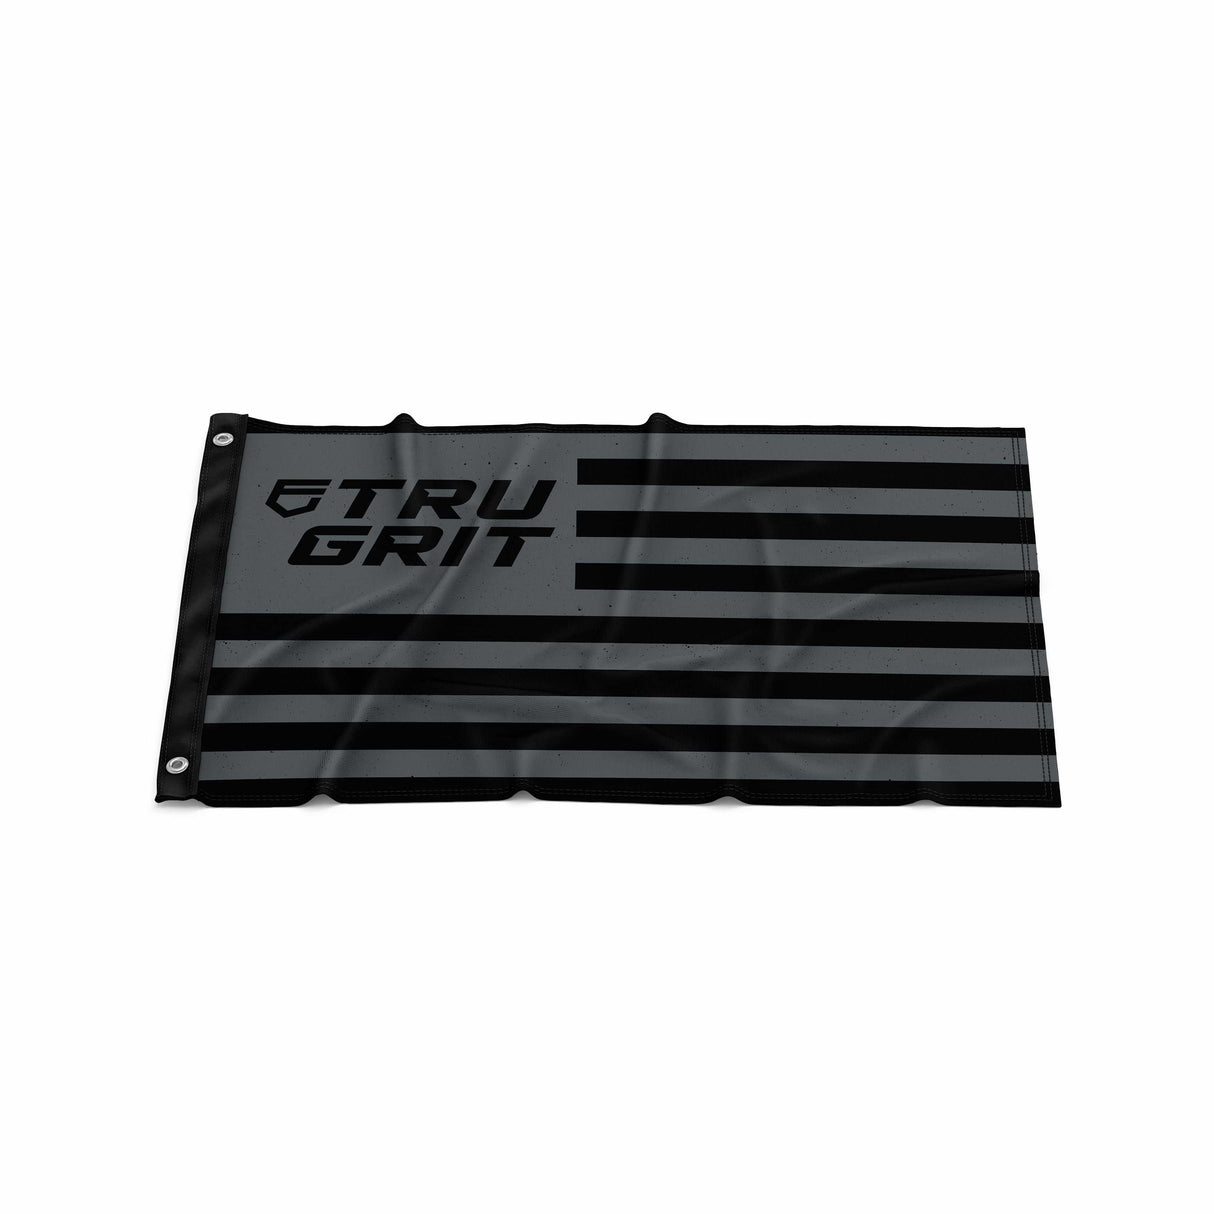 Tru Grit US Gym Flag 3' x 5' - Tru Grit Fitness